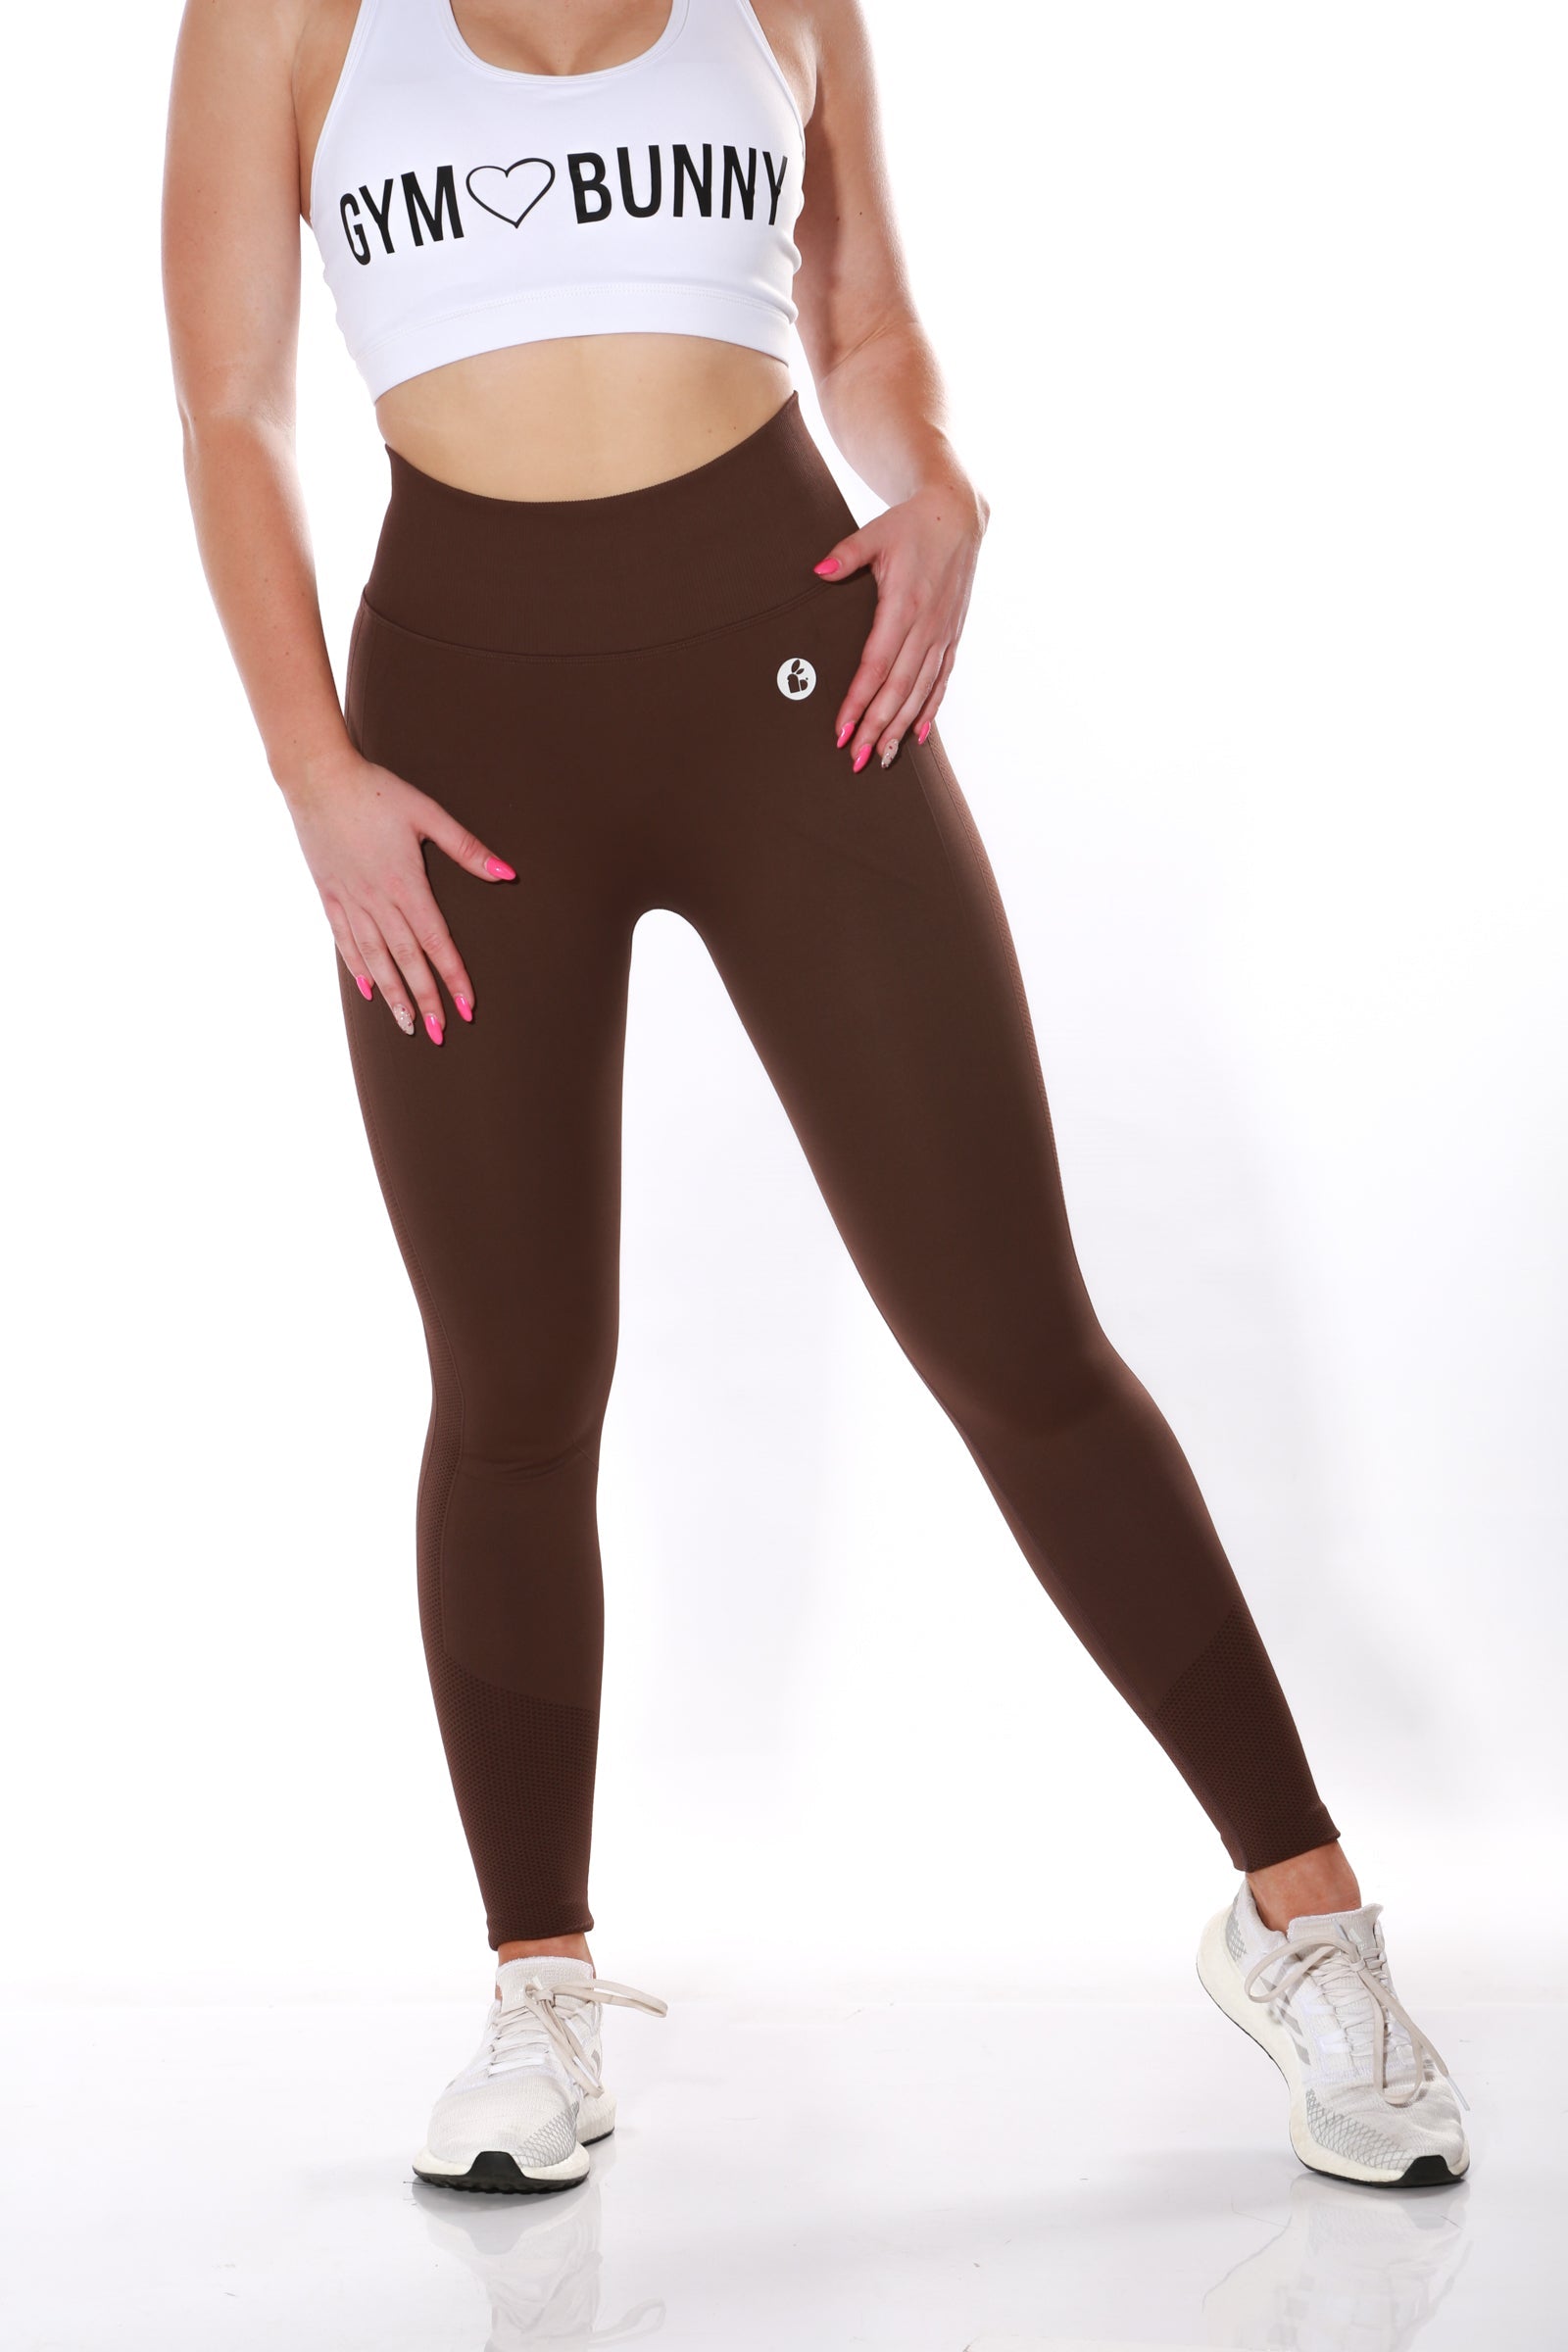 Image of Gymbunny Super scrunch leggings -Brown